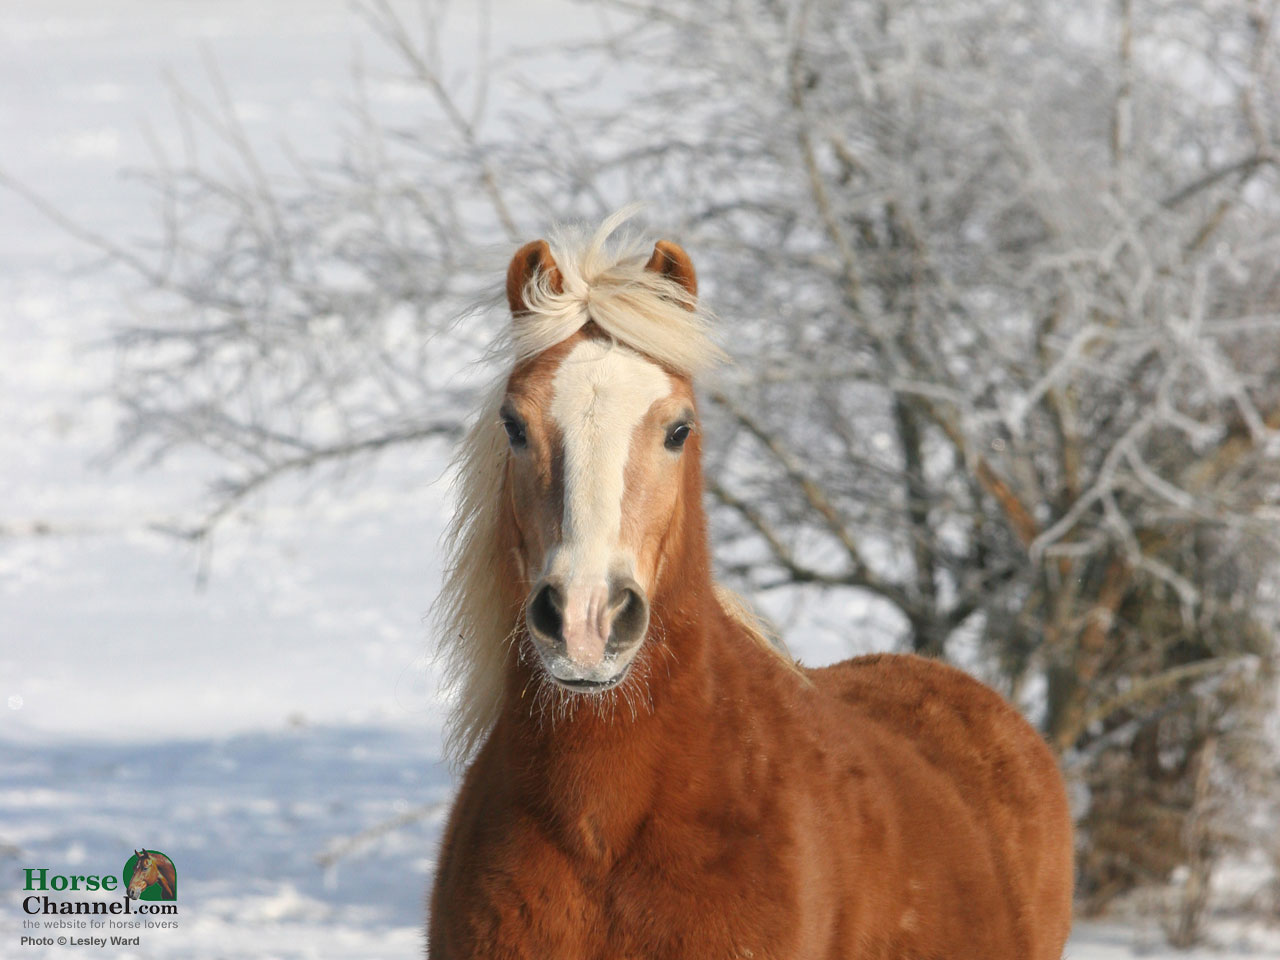 Screensaver And Desktop Wallpaper Of Winter Equine Scenery